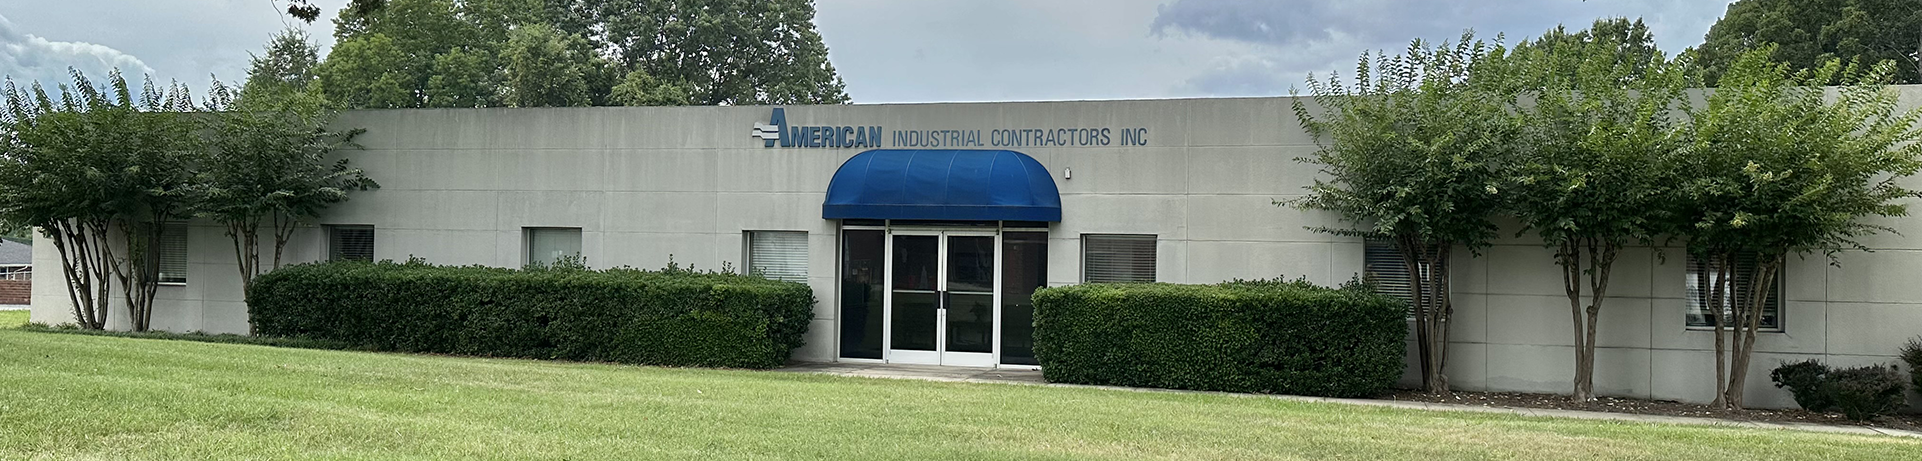 American Industrial Contractors Office